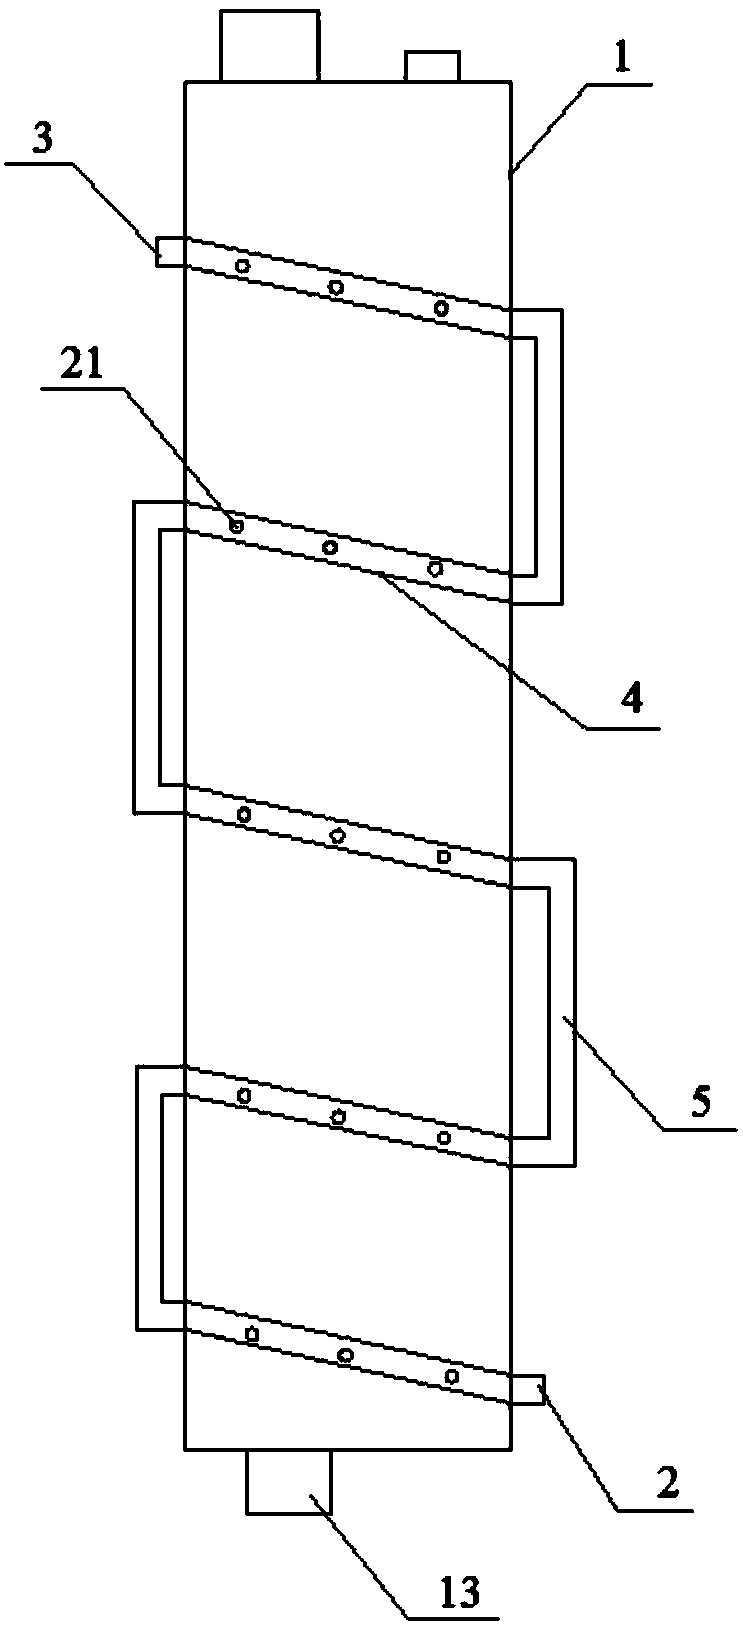 P-xylene crystal separation method